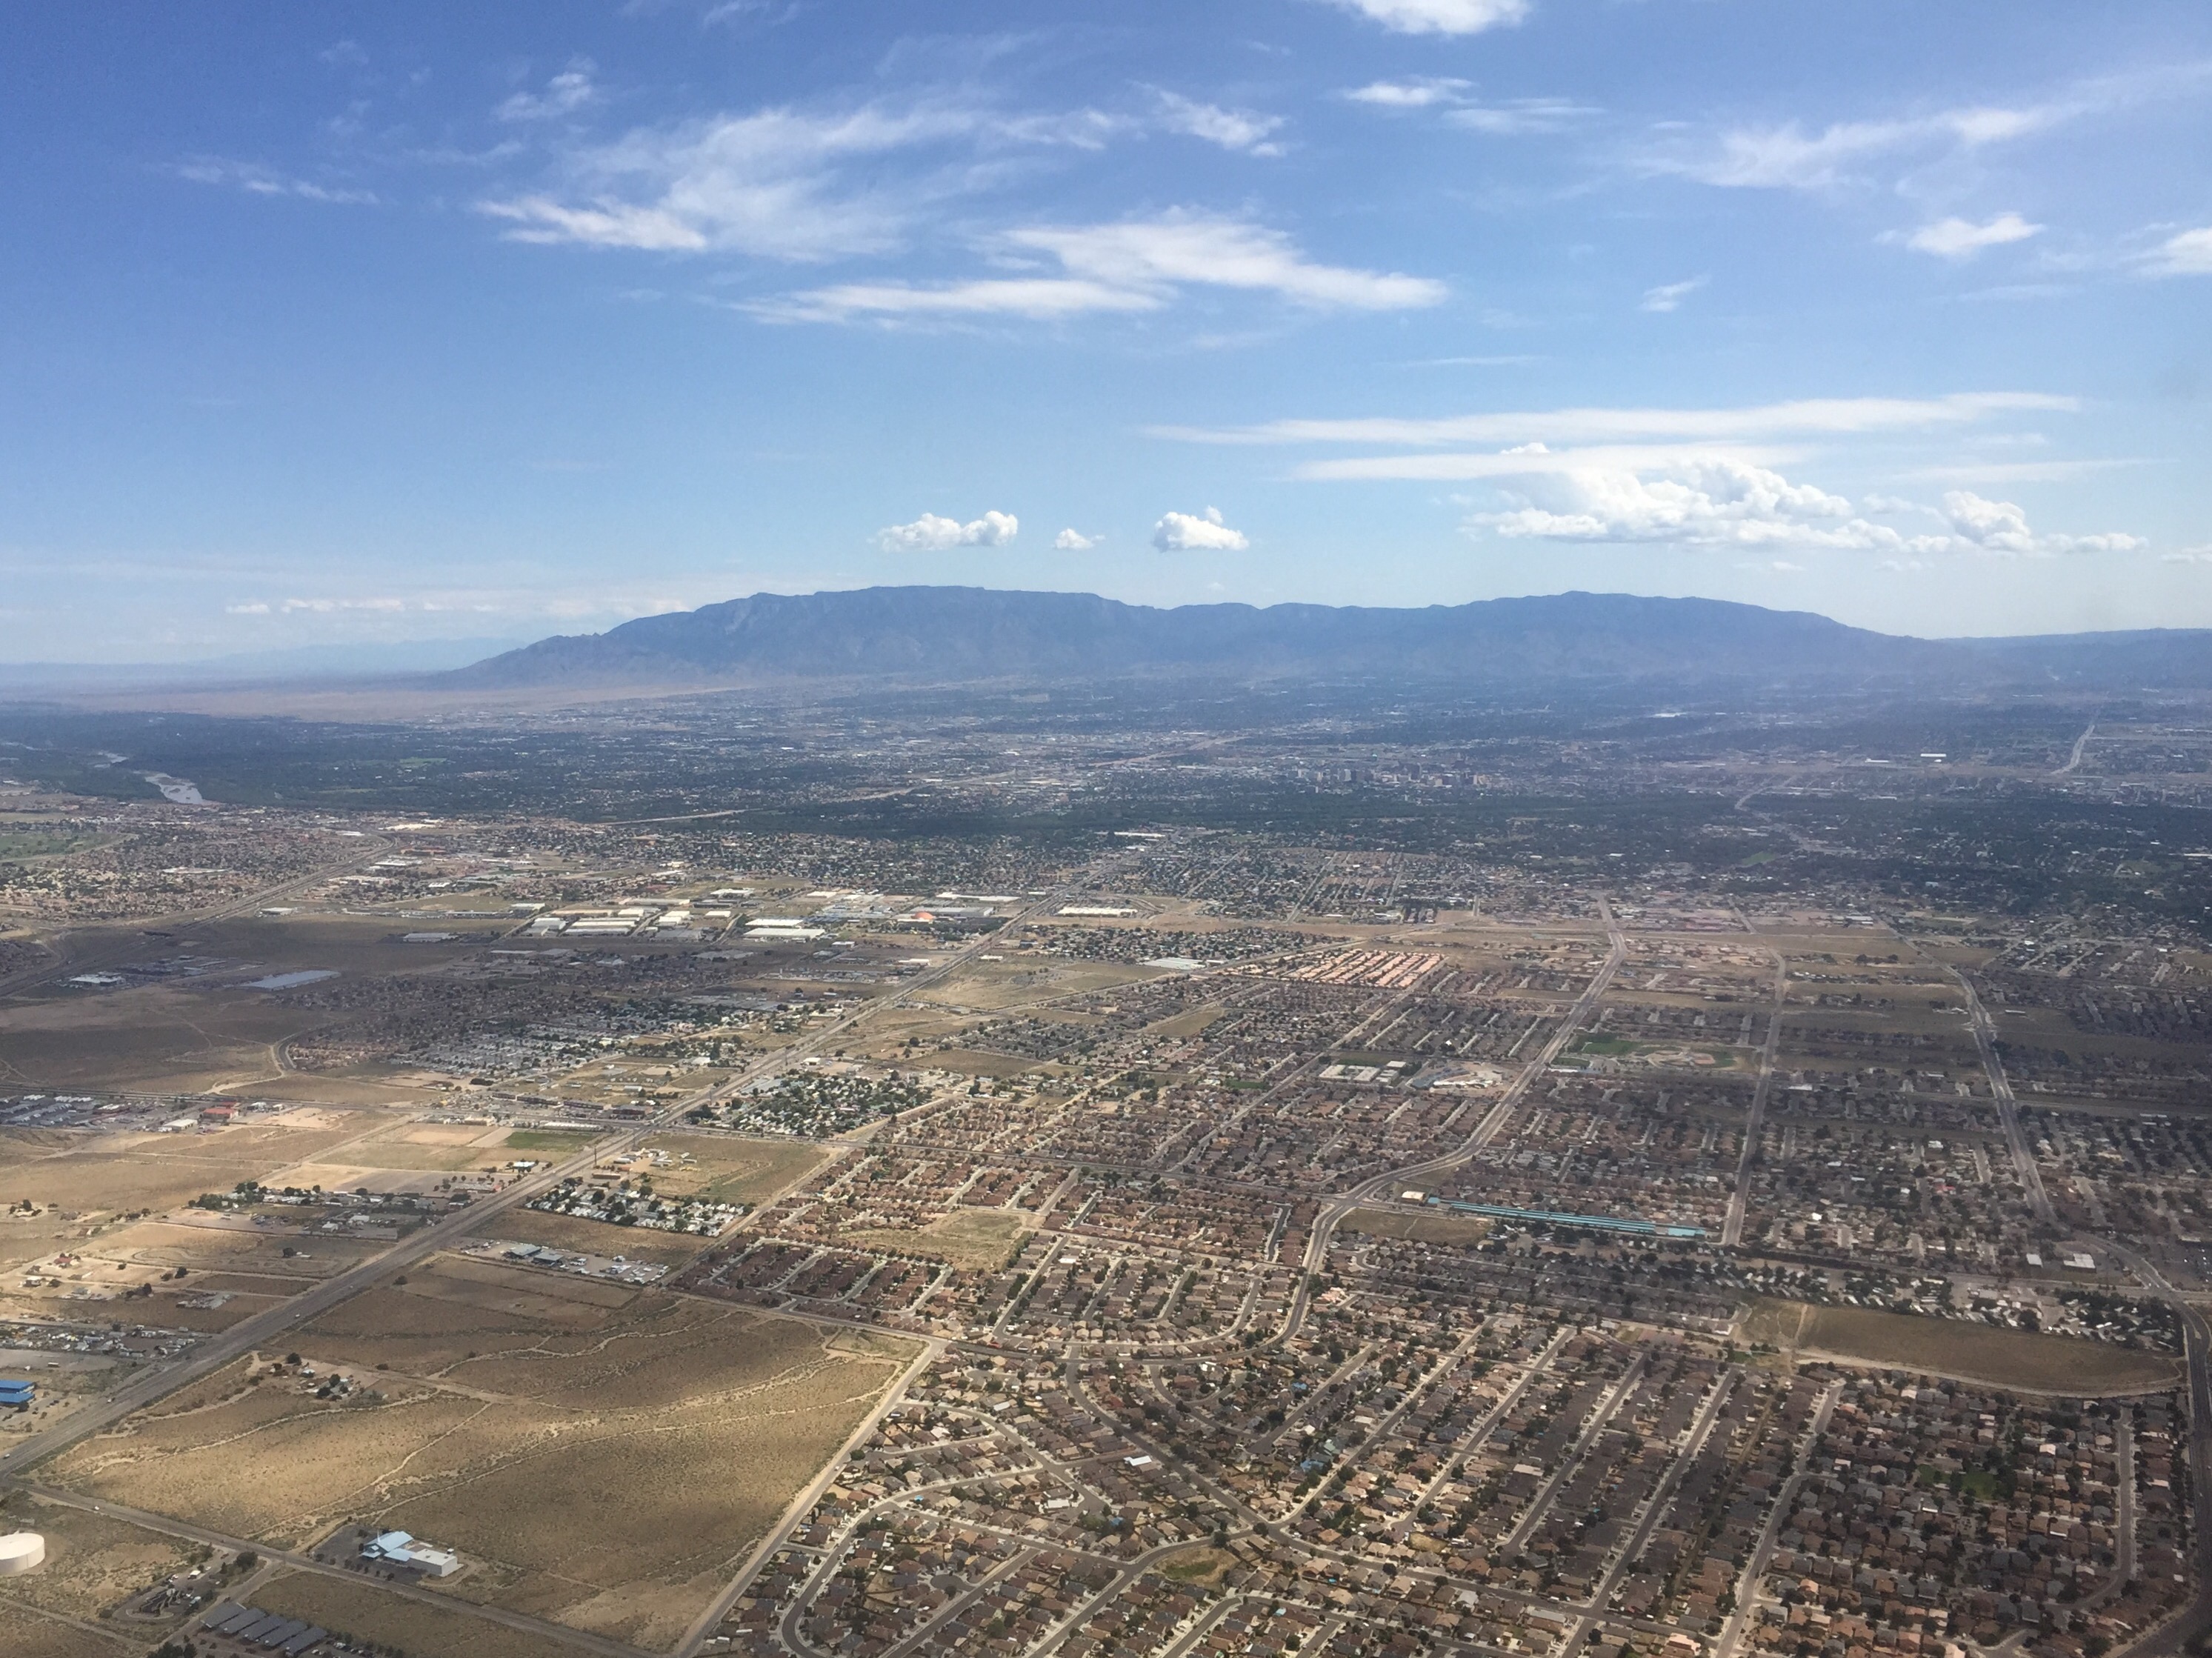 Albuquerque from the Air